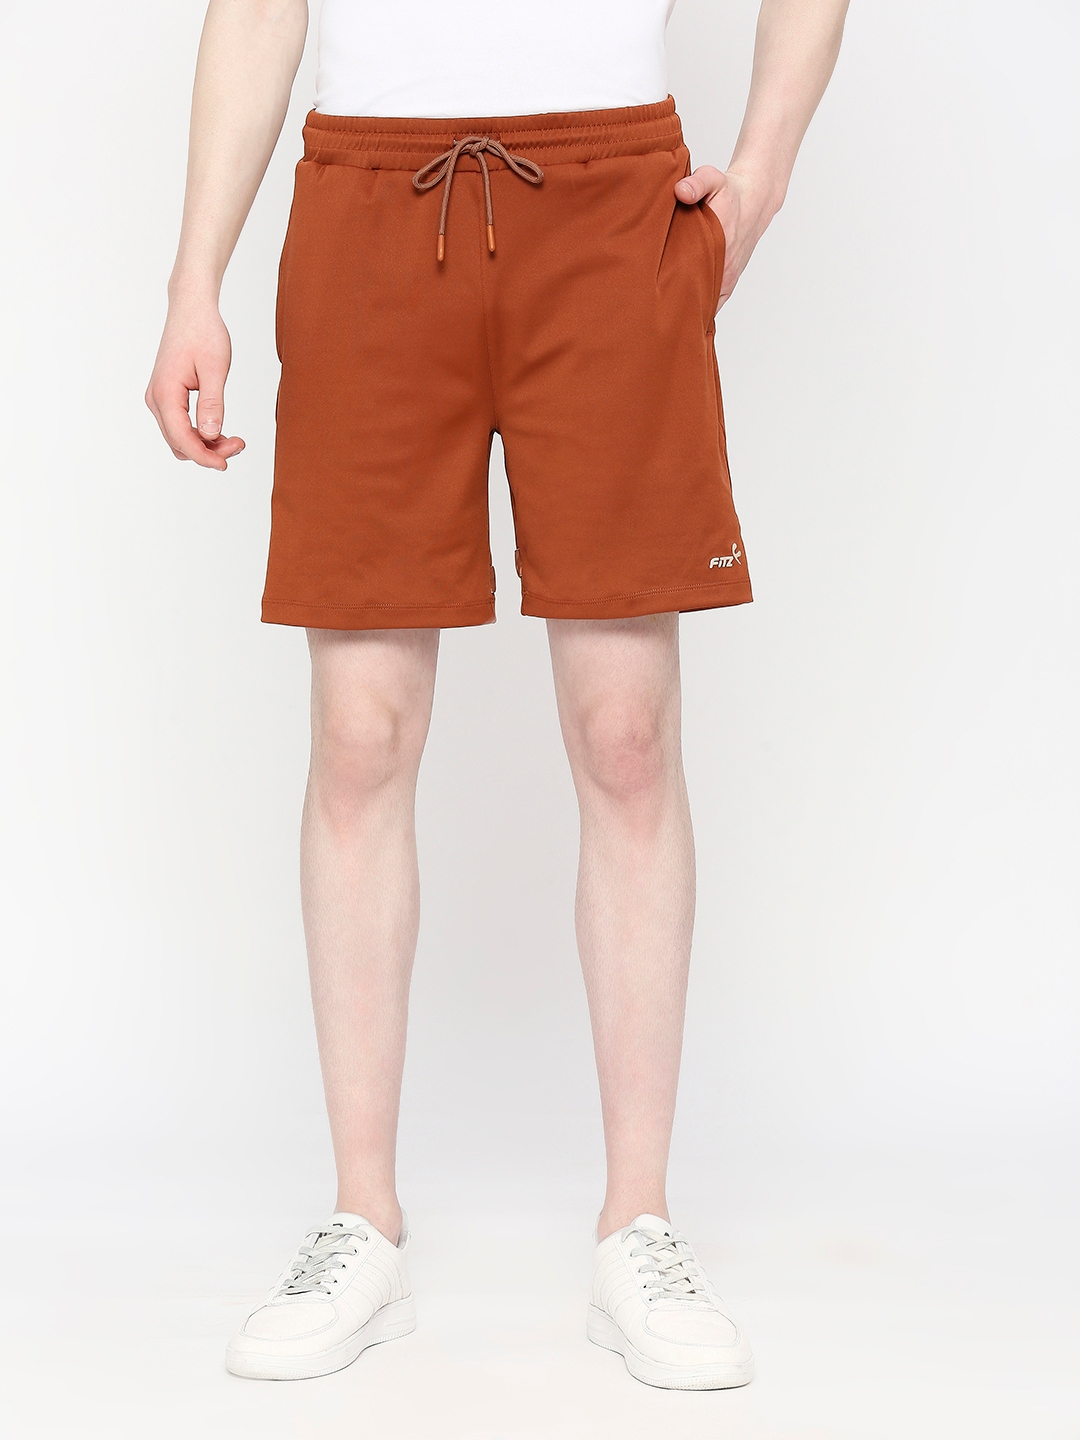 FITZ | Men's  Slim Fit Cotton Brown Shorts 0